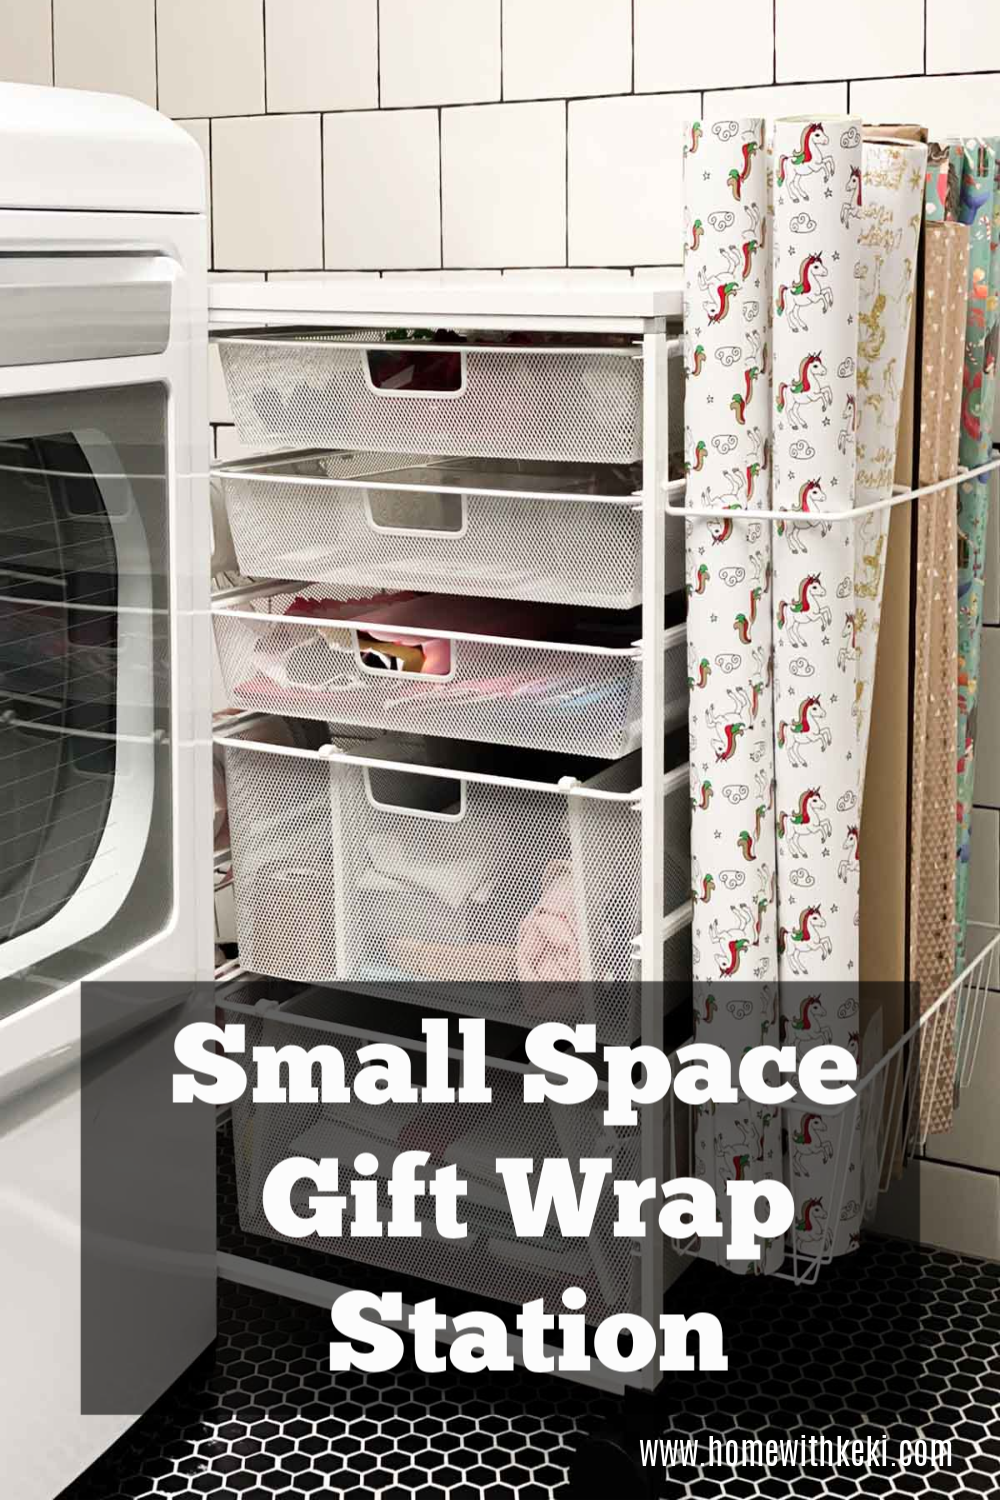 gift wrap cart gift wrap station white tile laundry room